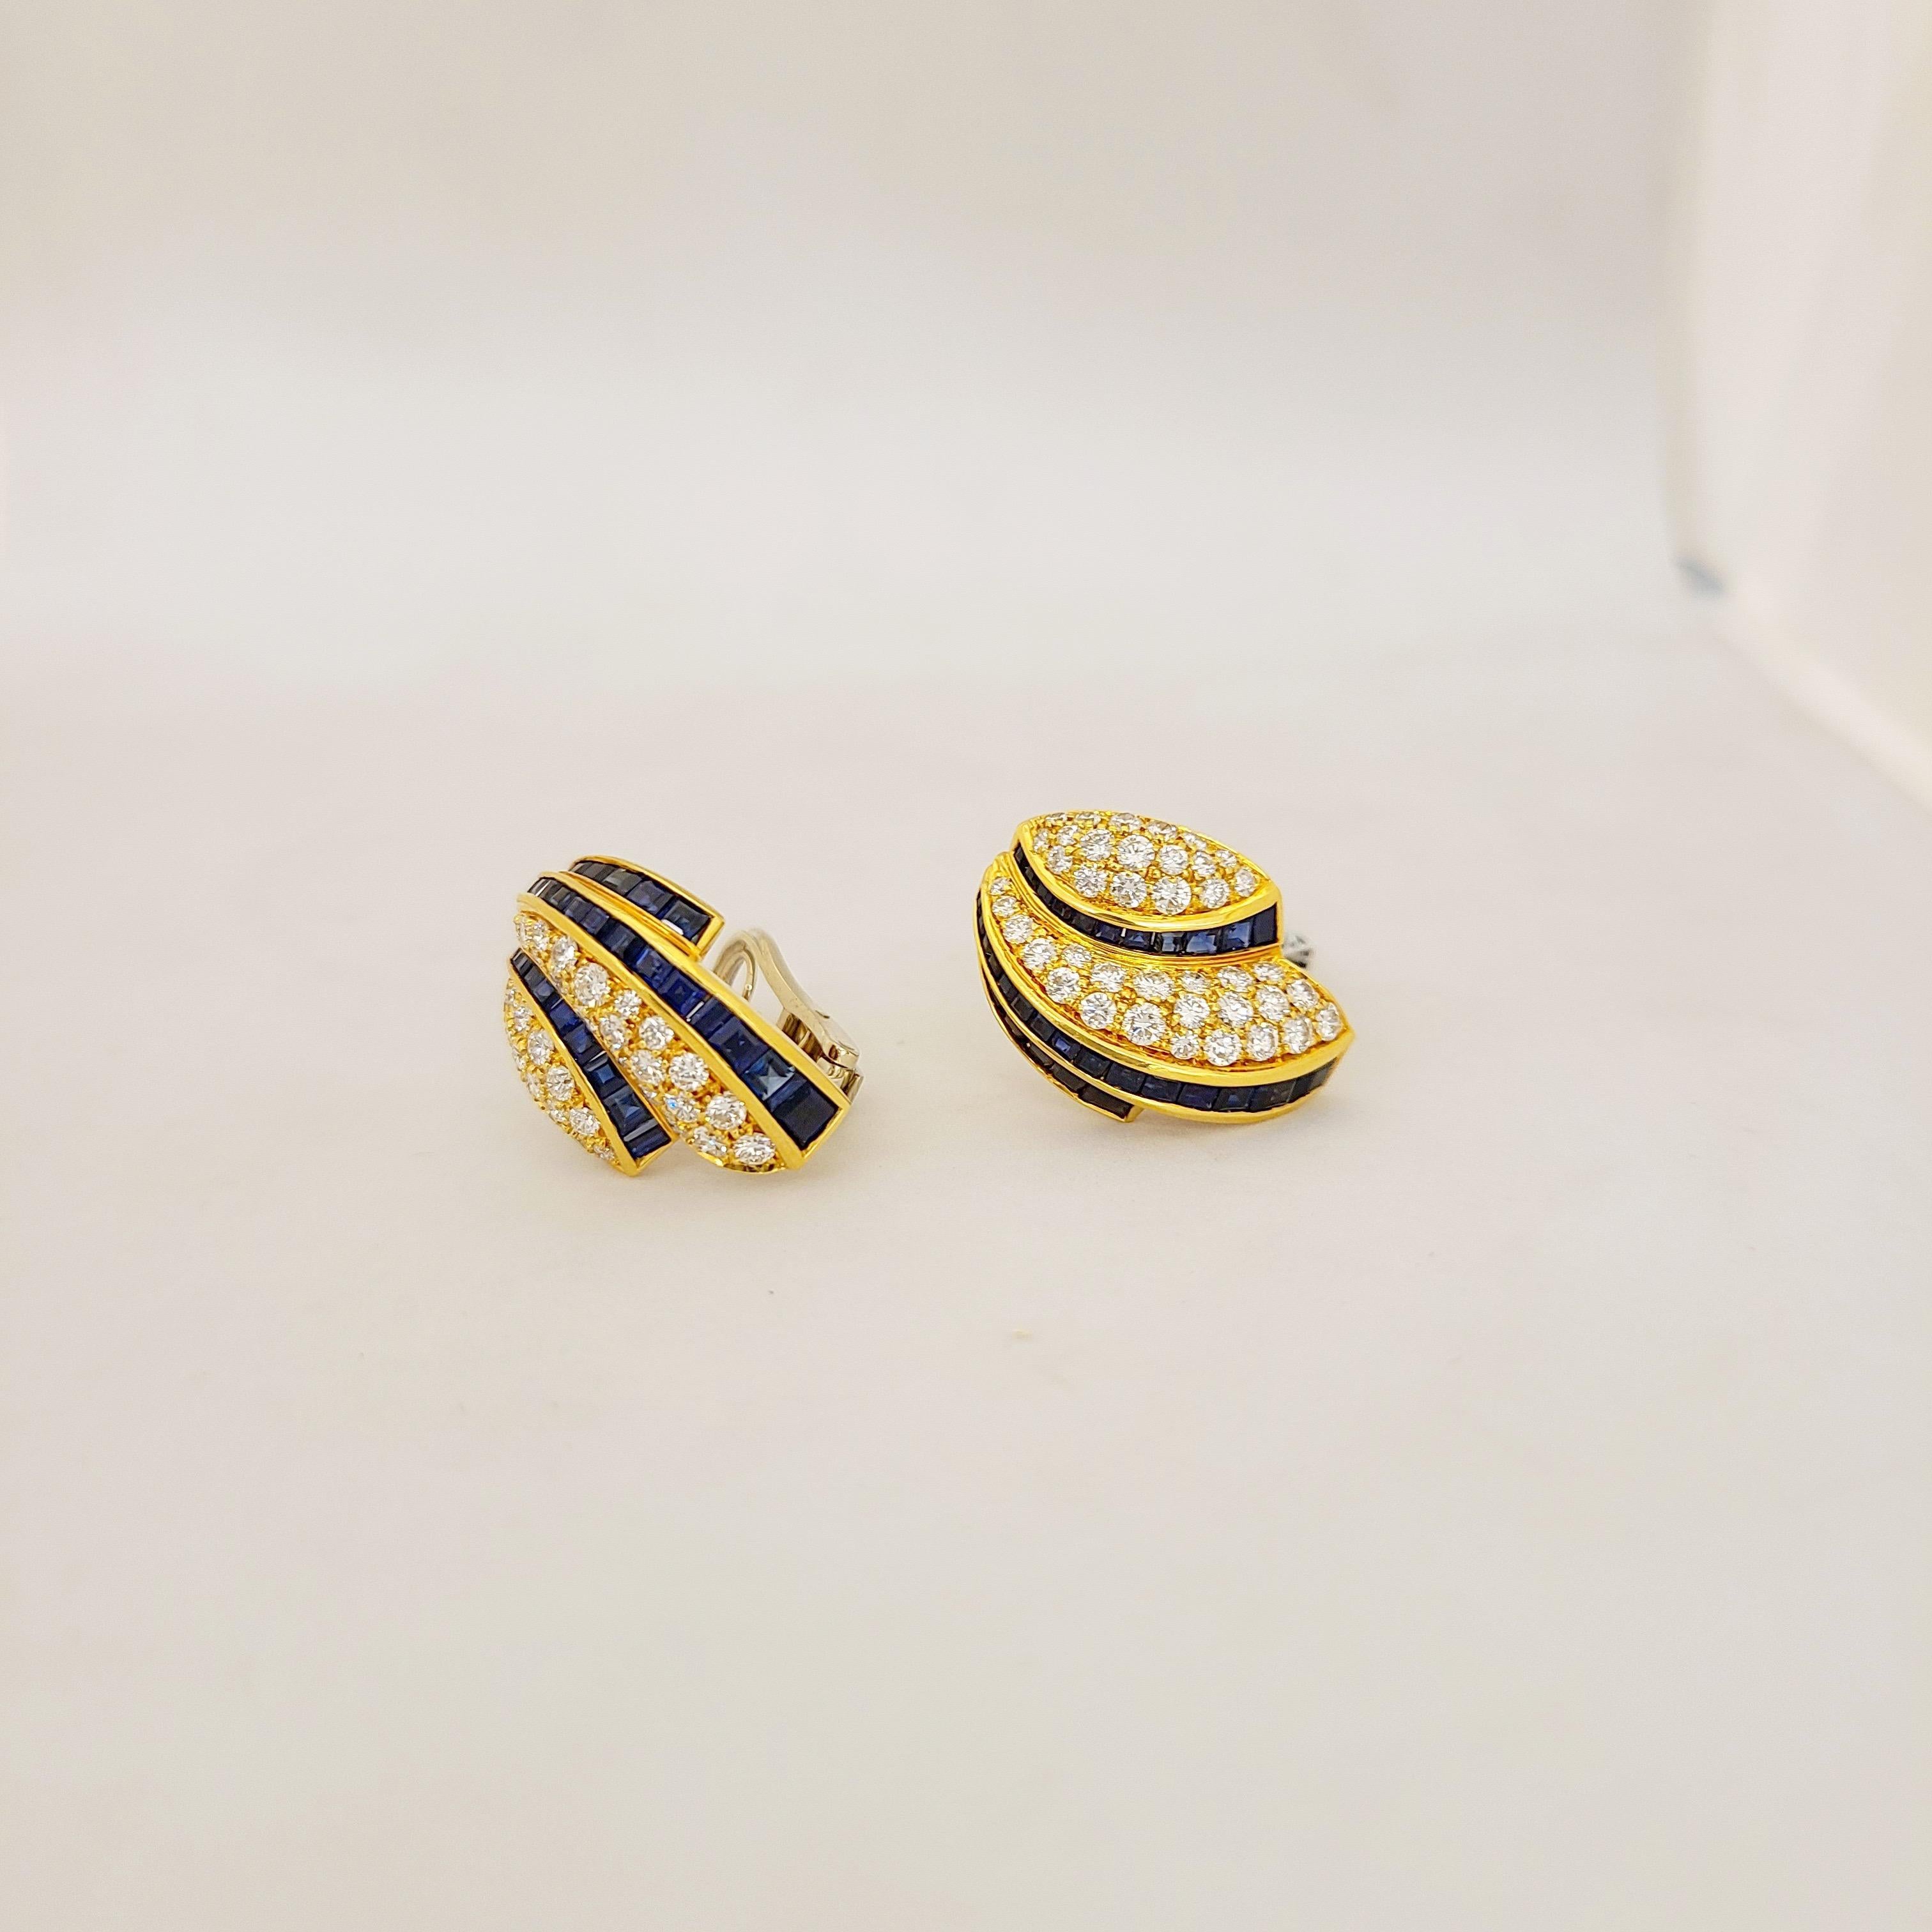 Contemporary Picchiotti 18 Karat Gold 4.58 Carat Sapphire and 2.32 Carat Diamond Earrings For Sale